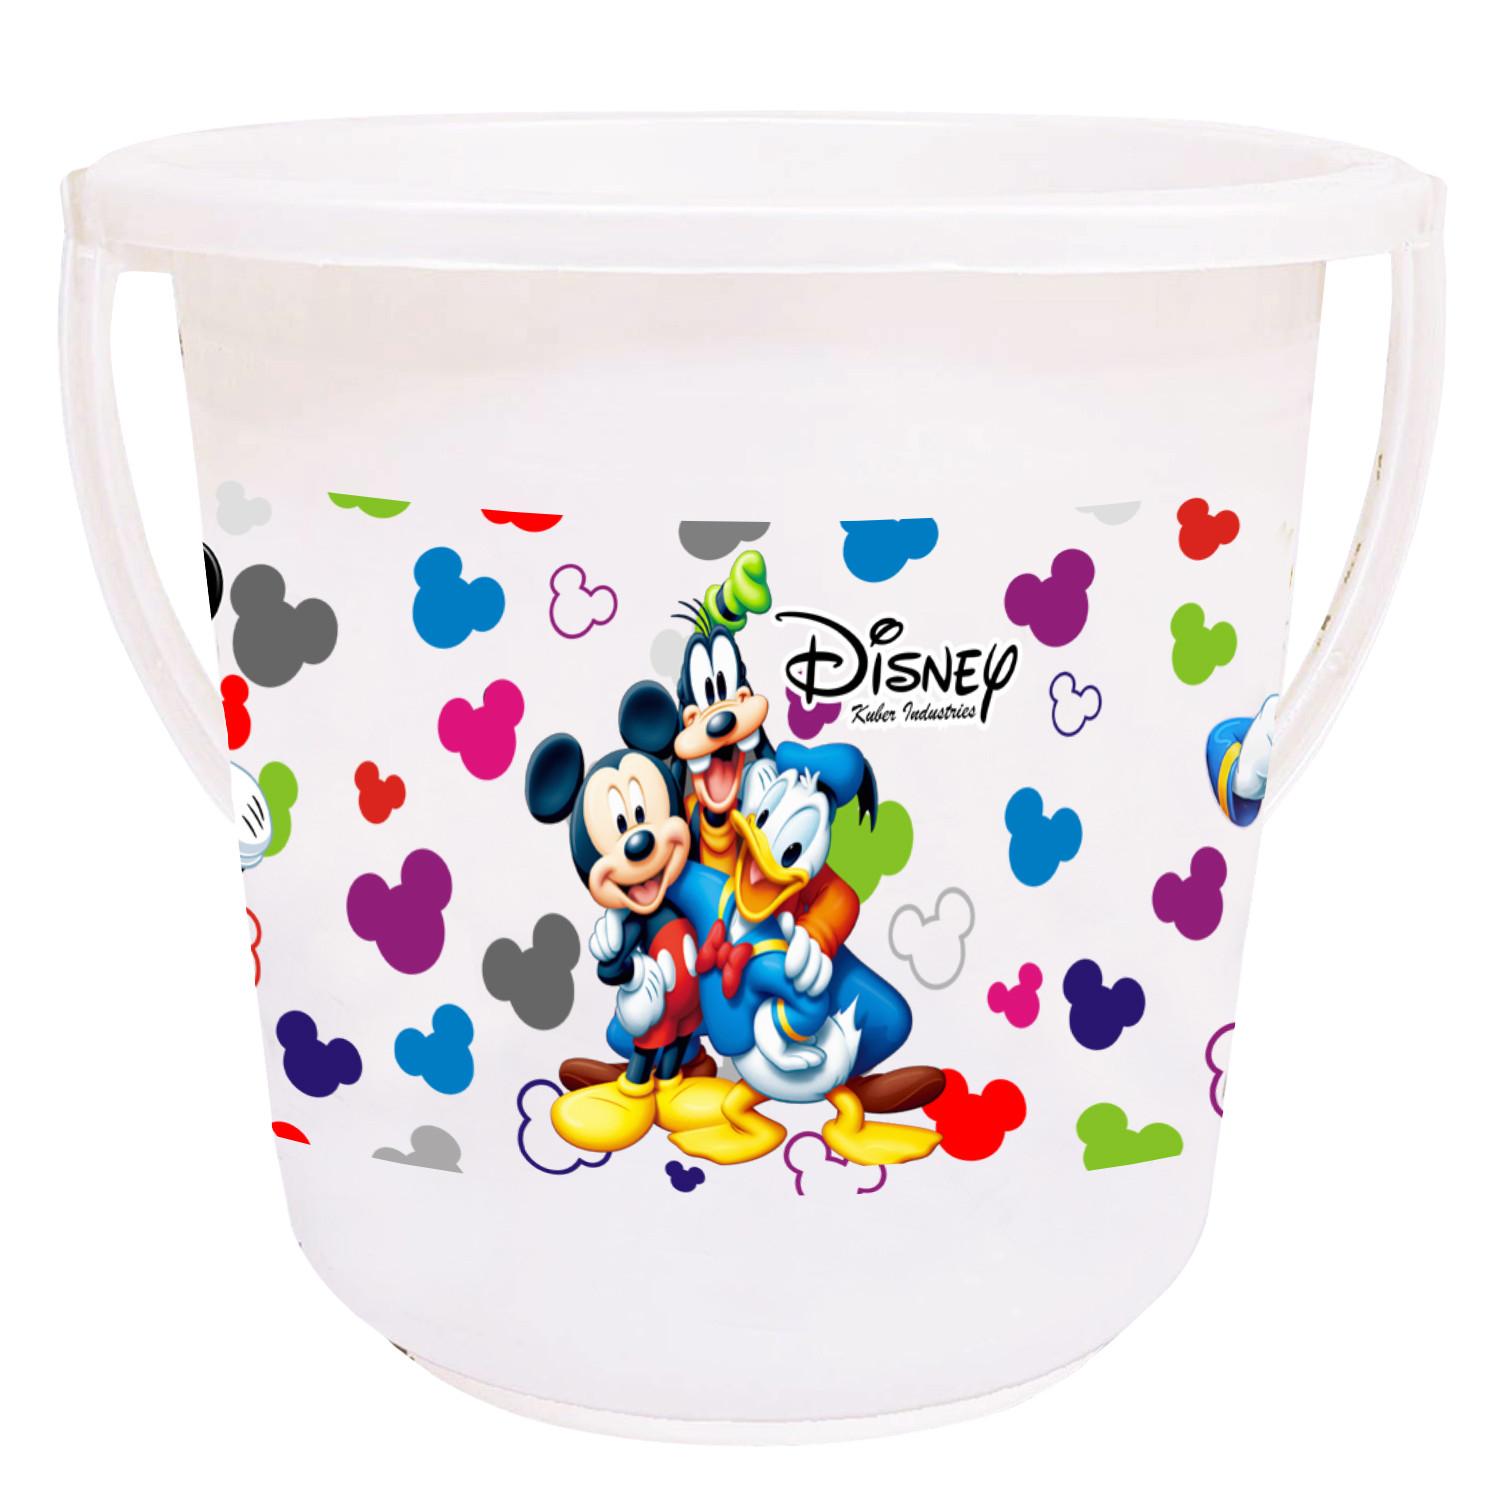 Kuber Industries Disney Team Mickey Print Plastic Bathroom Set of 5 Pieces with Bucket, Tub, Stool, Dustbin & Mug (White)-KUBMART15273 -HS_35_KUBMART17529